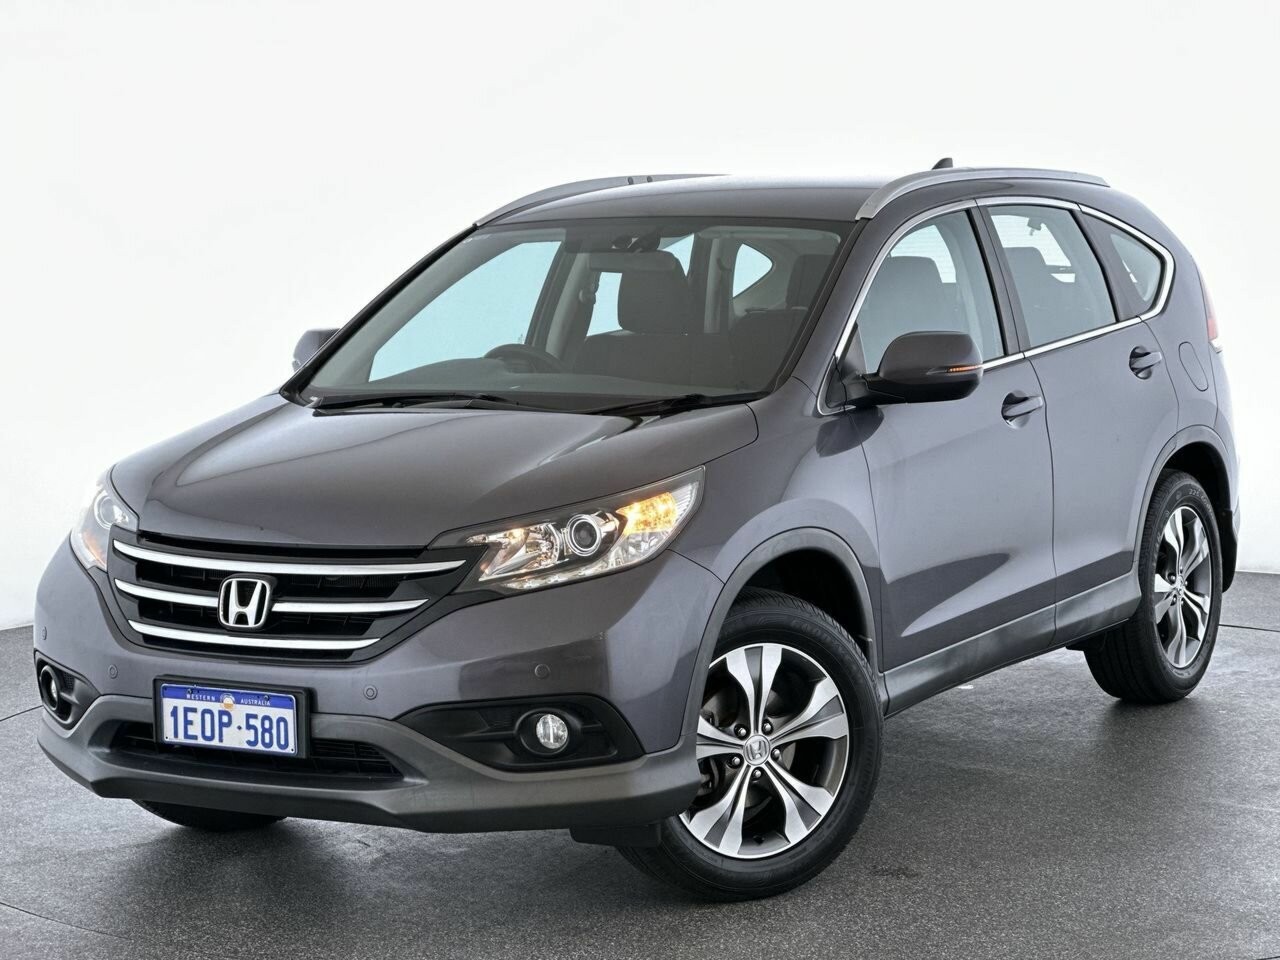 Honda Cr-v image 1